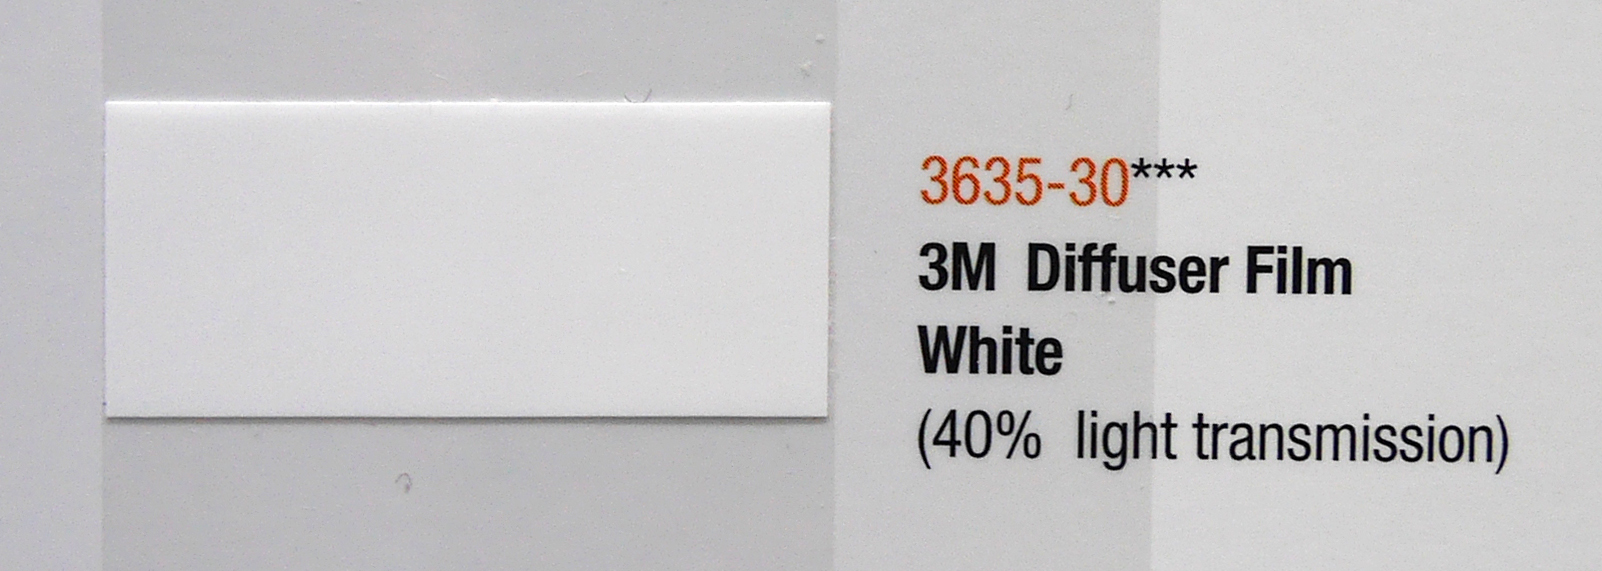 363530 3M Diffuser Film White Tanabutr